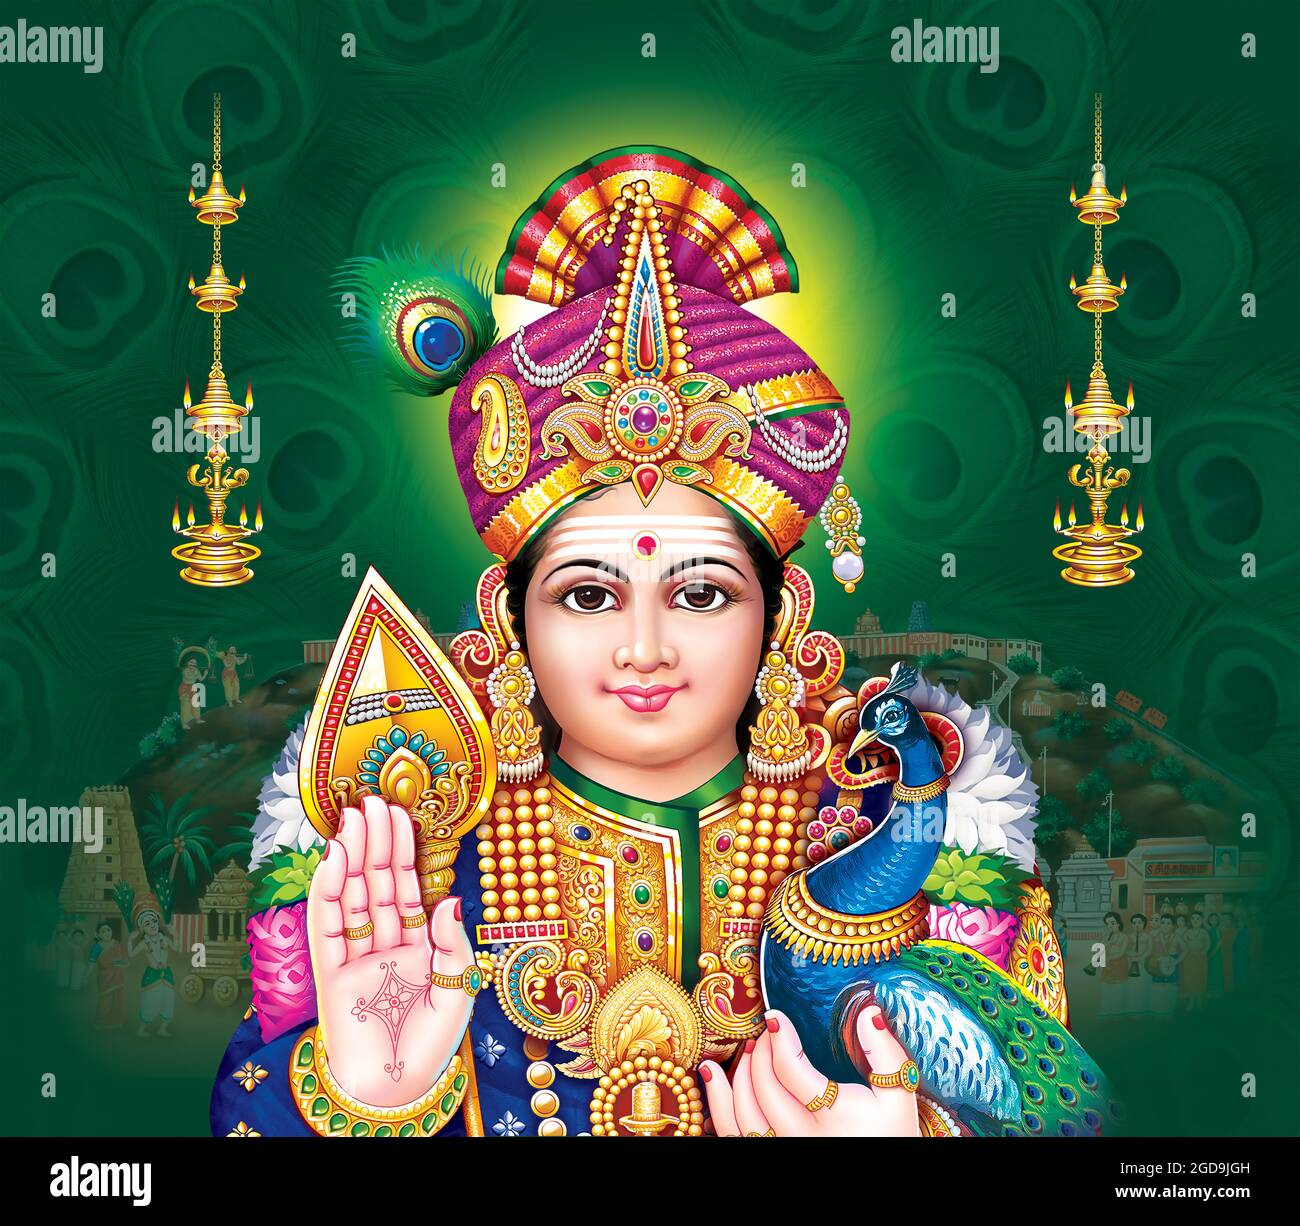 New Trending Hindu god Lord Subramaniam, Muruga, Shanmuga, Murugan fine painting digital arts Stock Photo